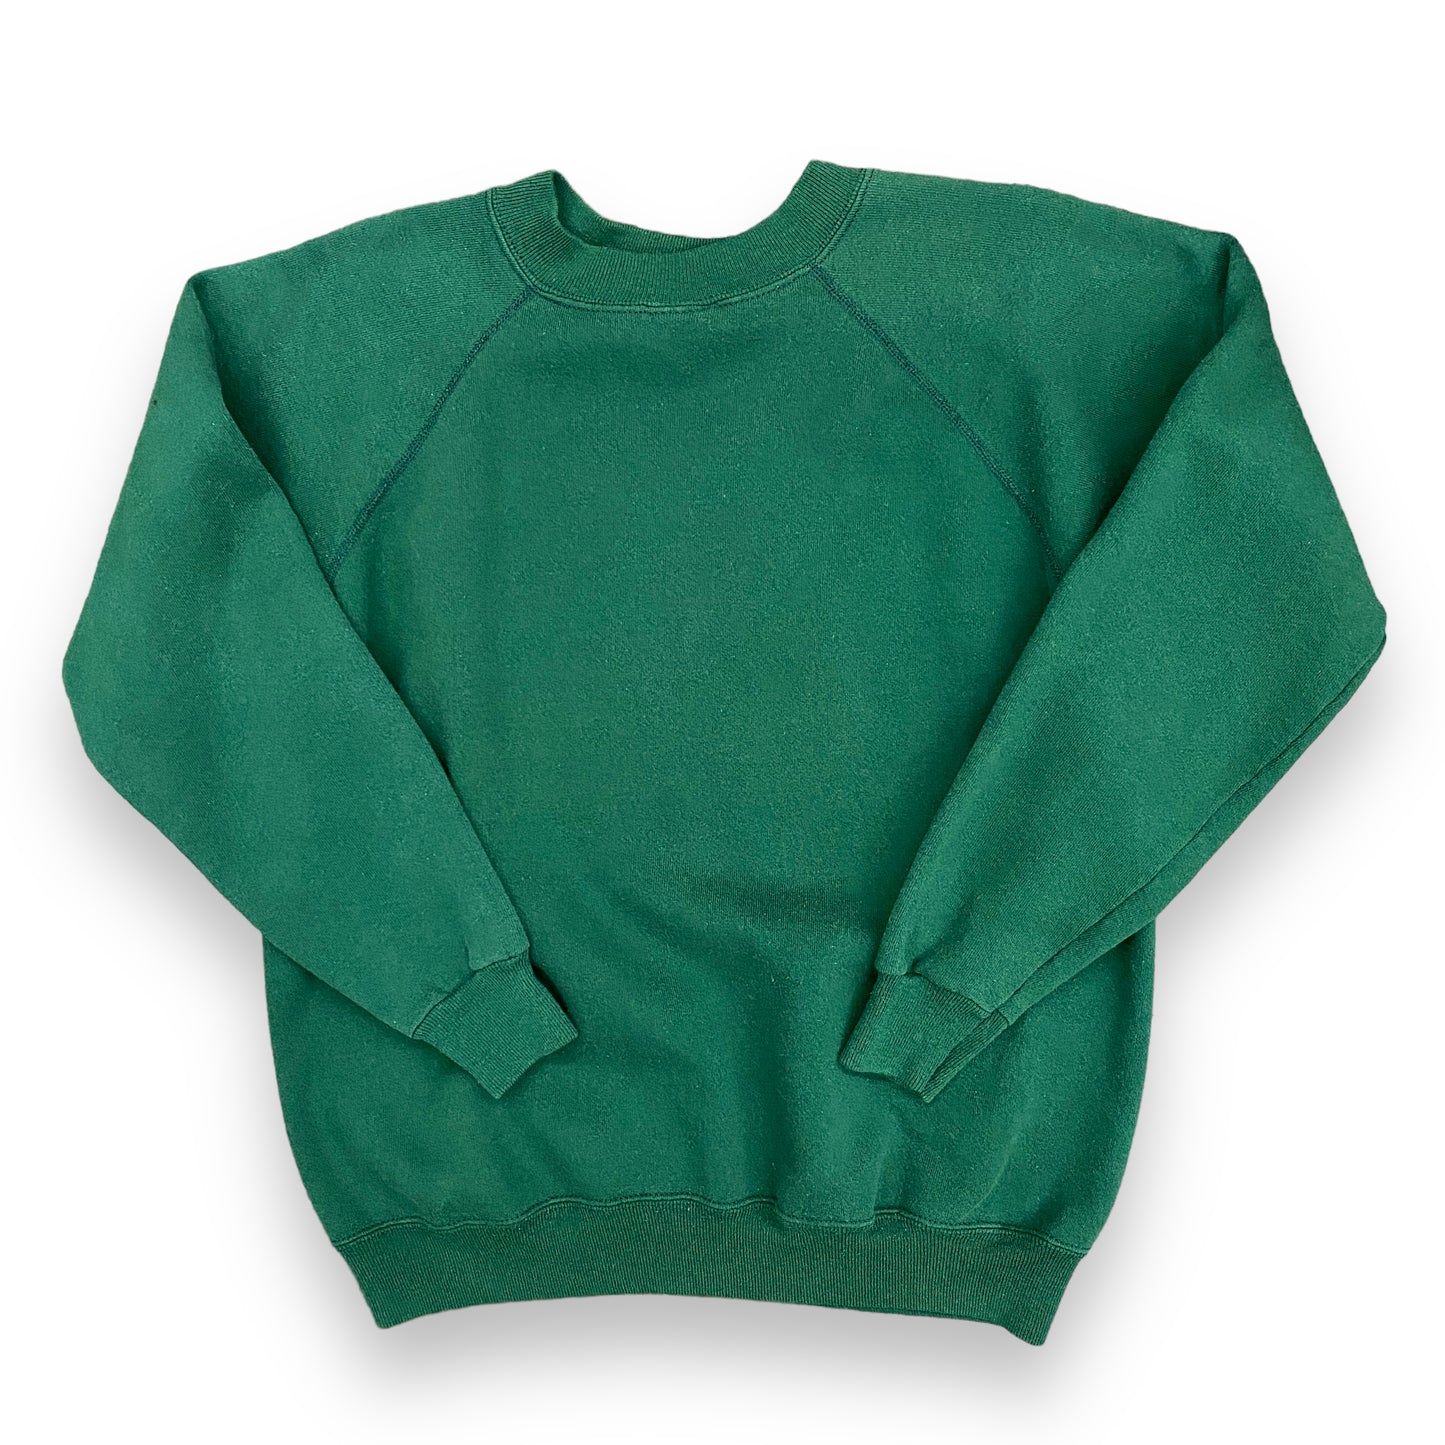 Vintage Forest Green Raglan Sweatshirt - Size Large